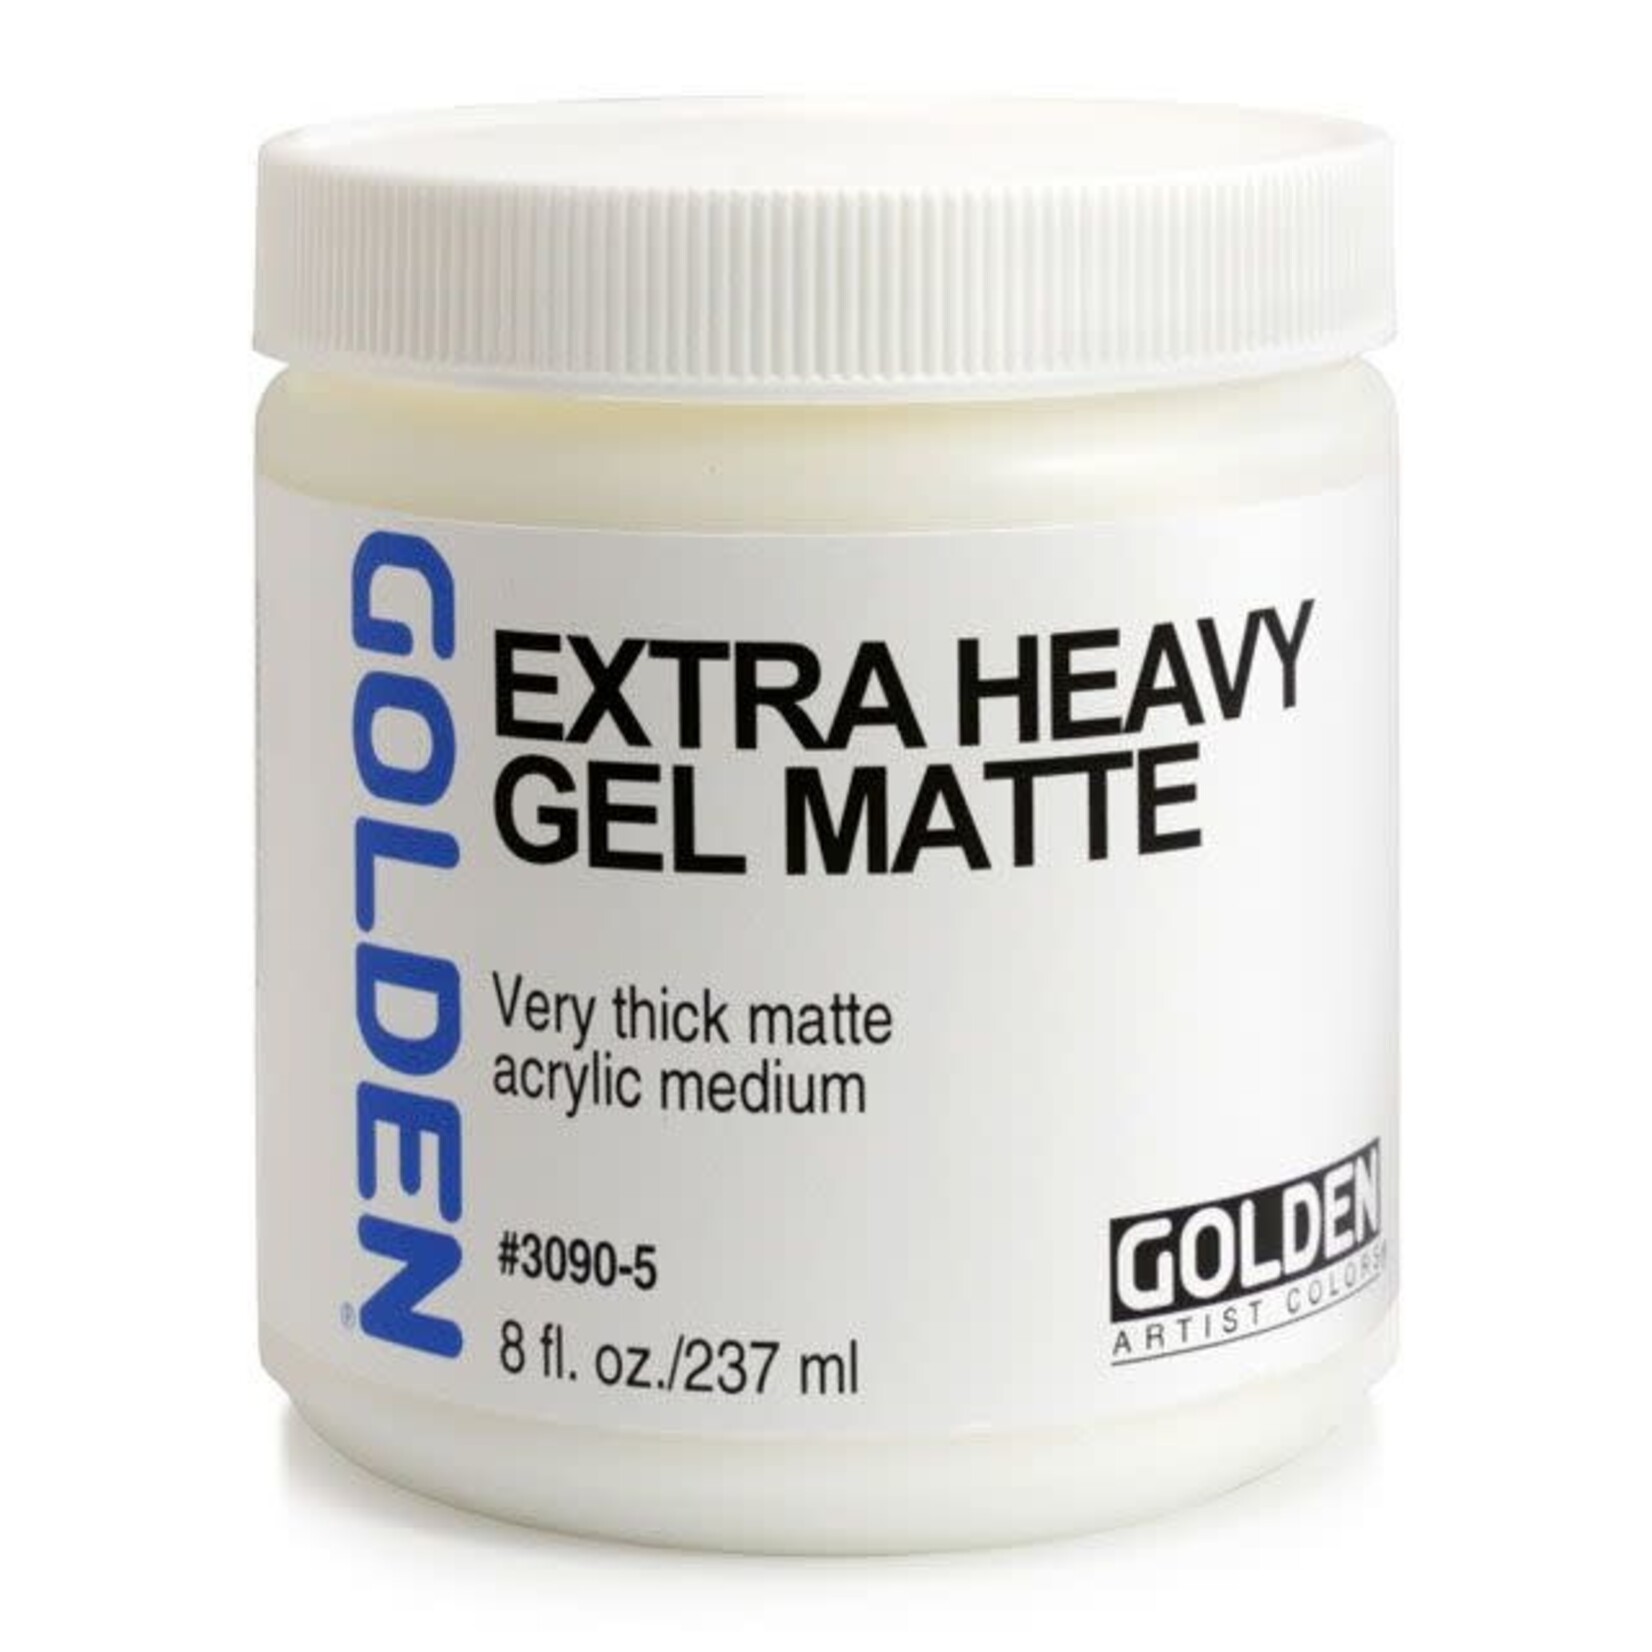 Golden Extra Heavy Gel Matte- 8 oz